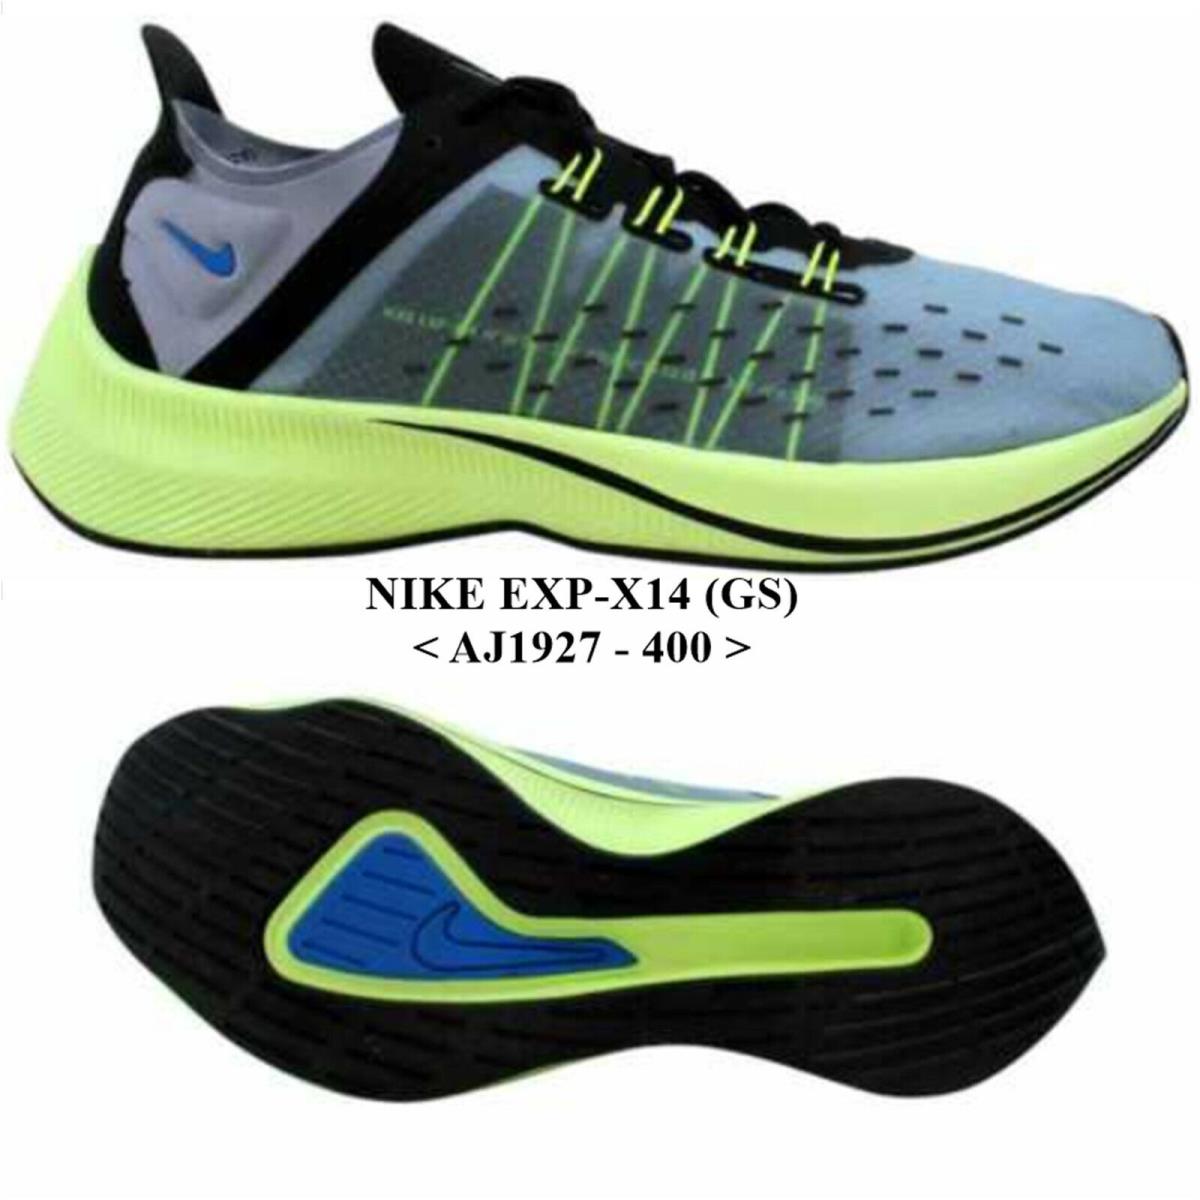 Nike EXP-X14 GS AJ1927 - 400 .unisex Youth Running Shoe